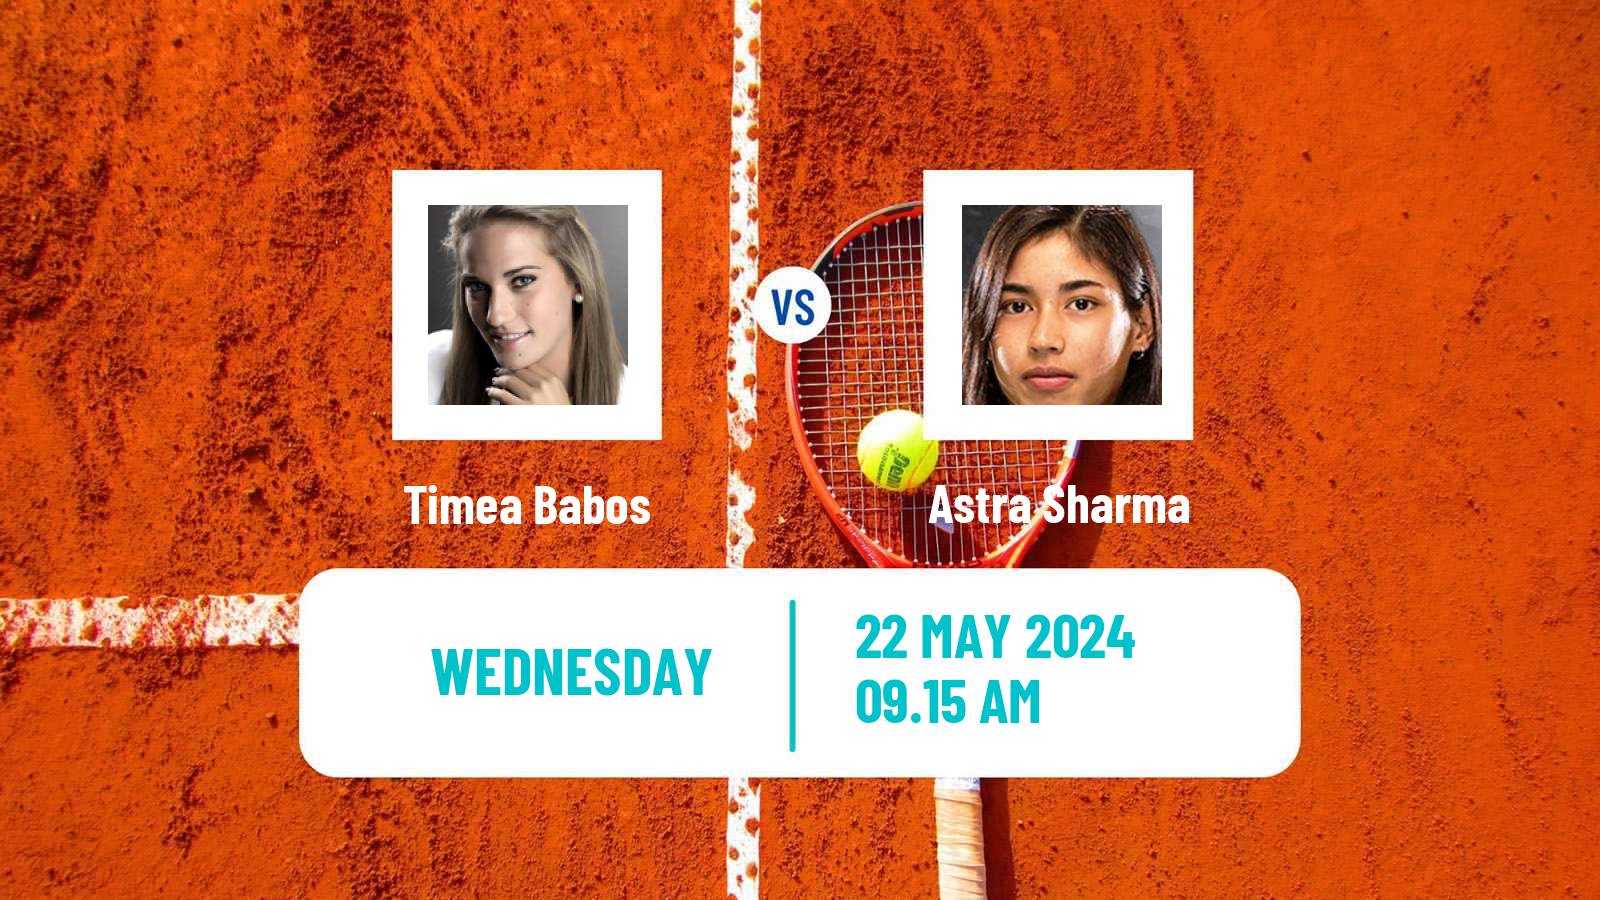 Tennis WTA Roland Garros Timea Babos - Astra Sharma